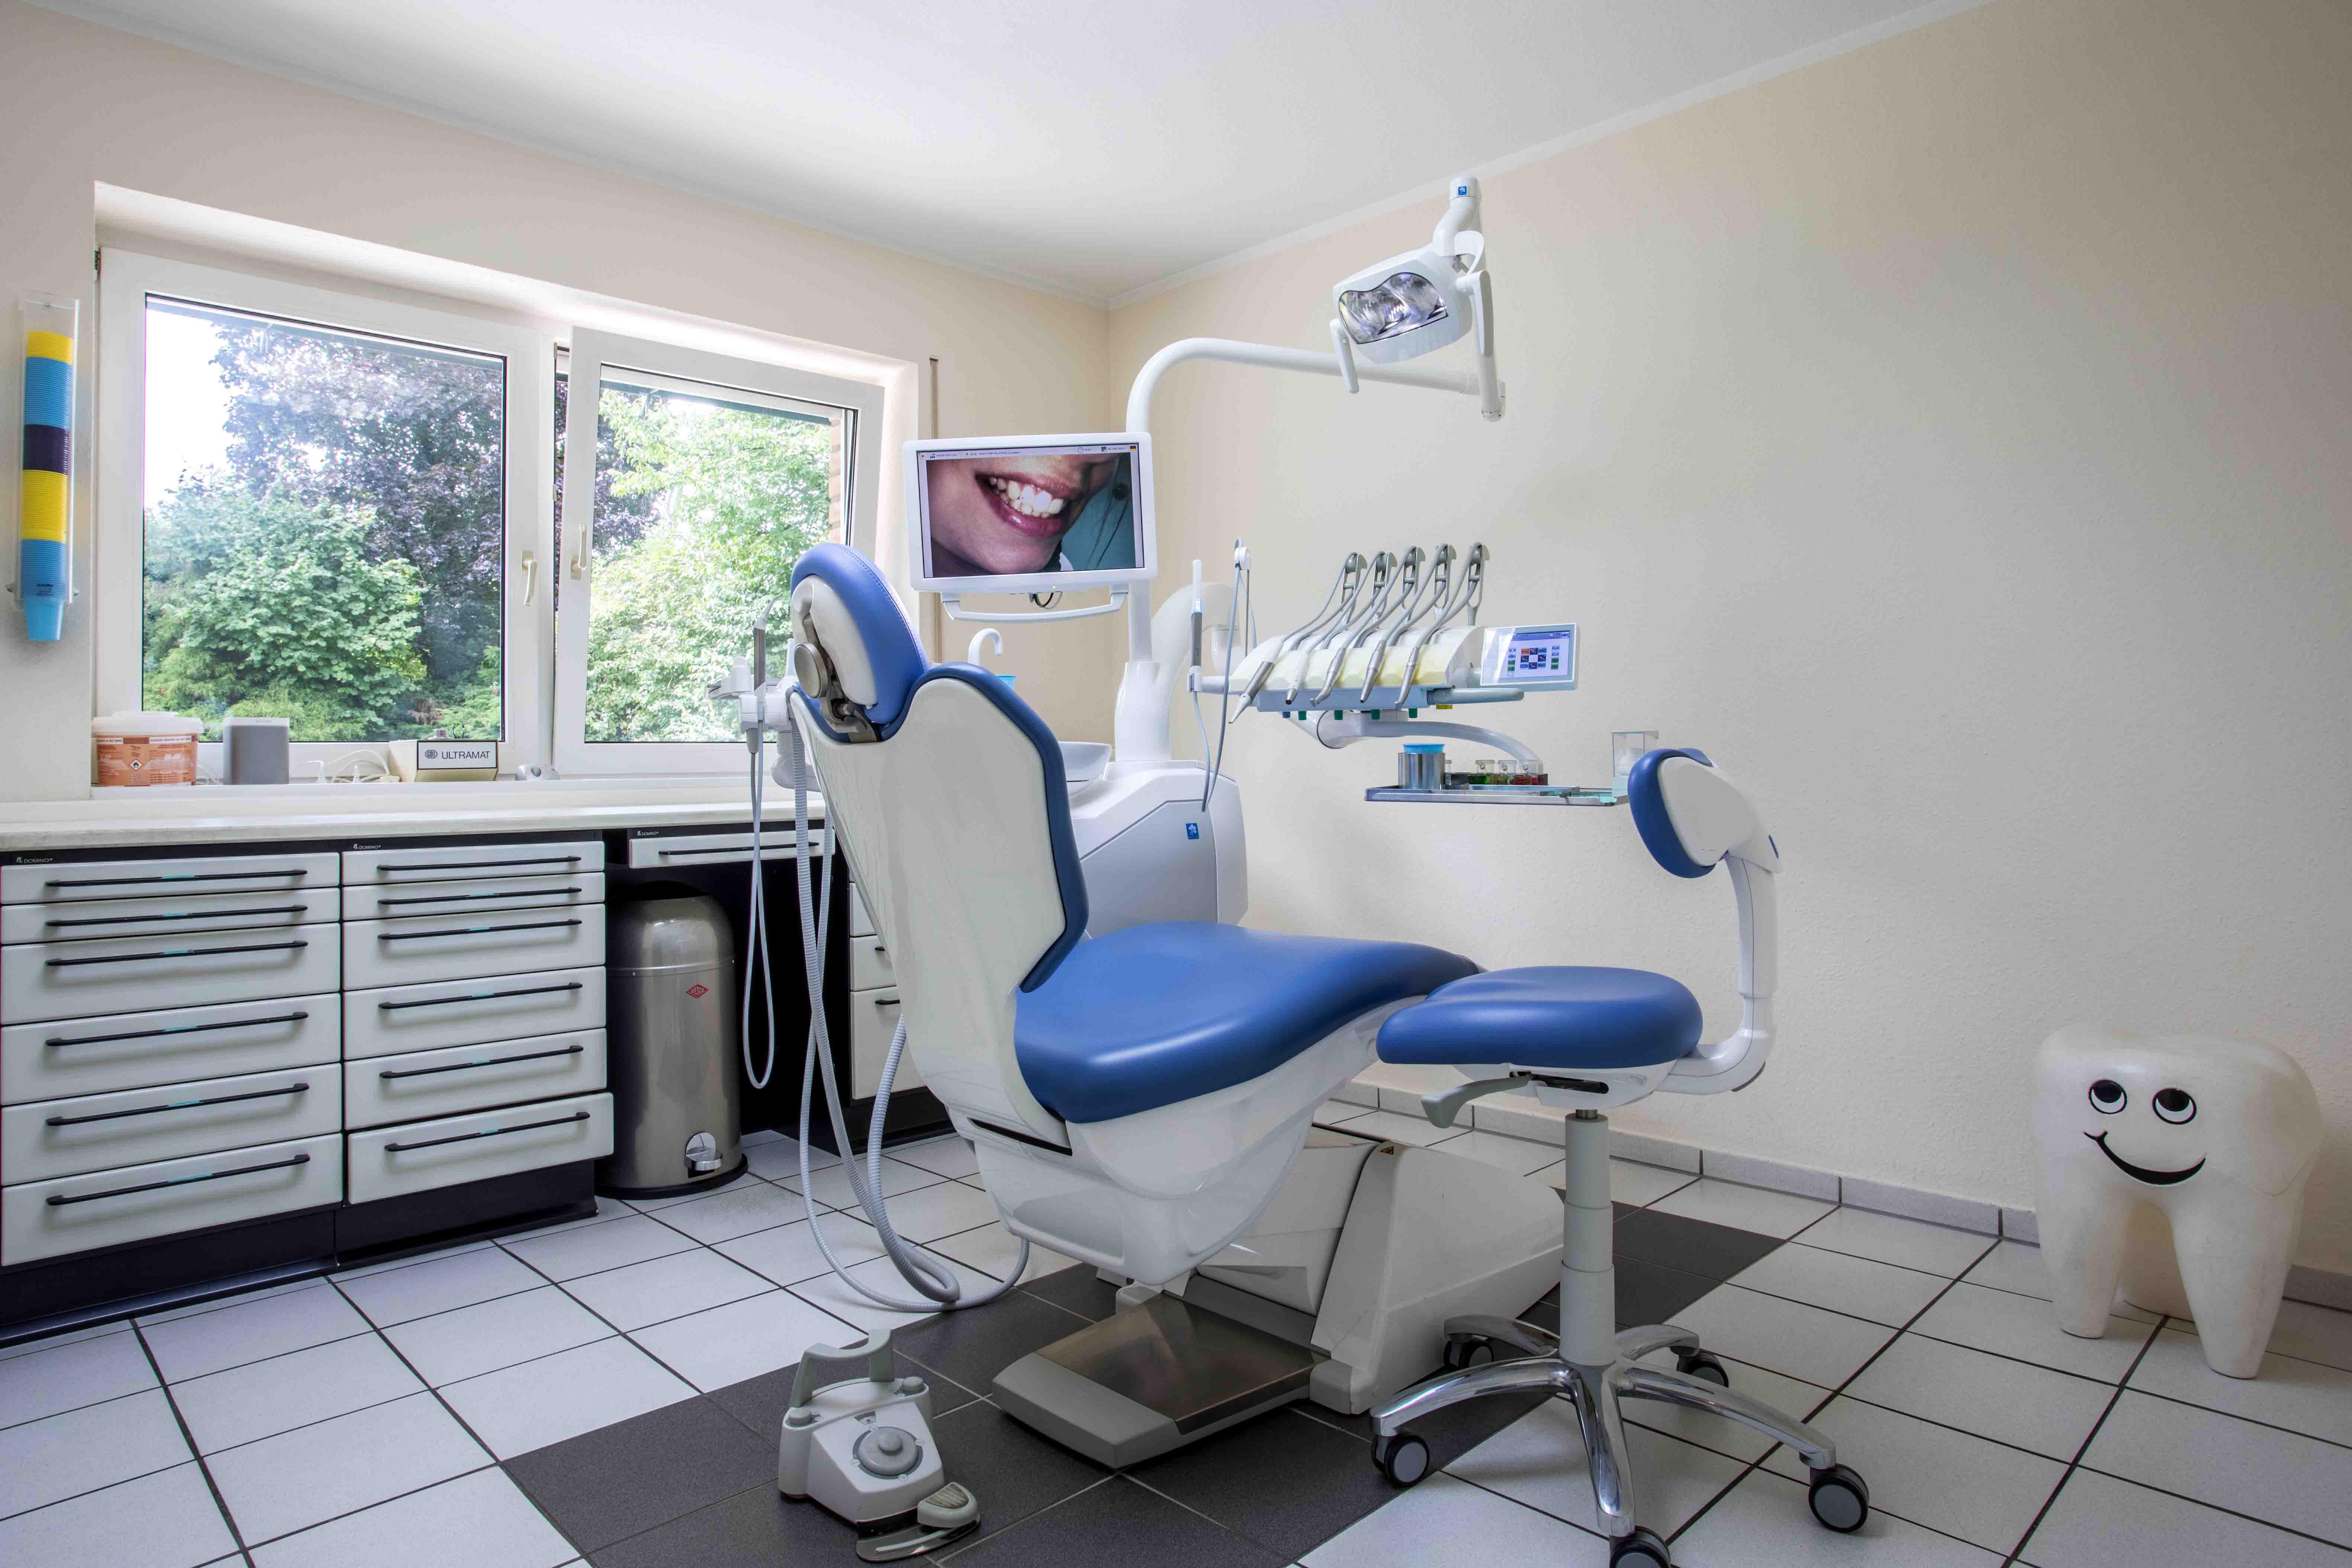 Fotos - Zahnarzt | Implantologie | Bleaching Martin Hanke Bornheim - 9